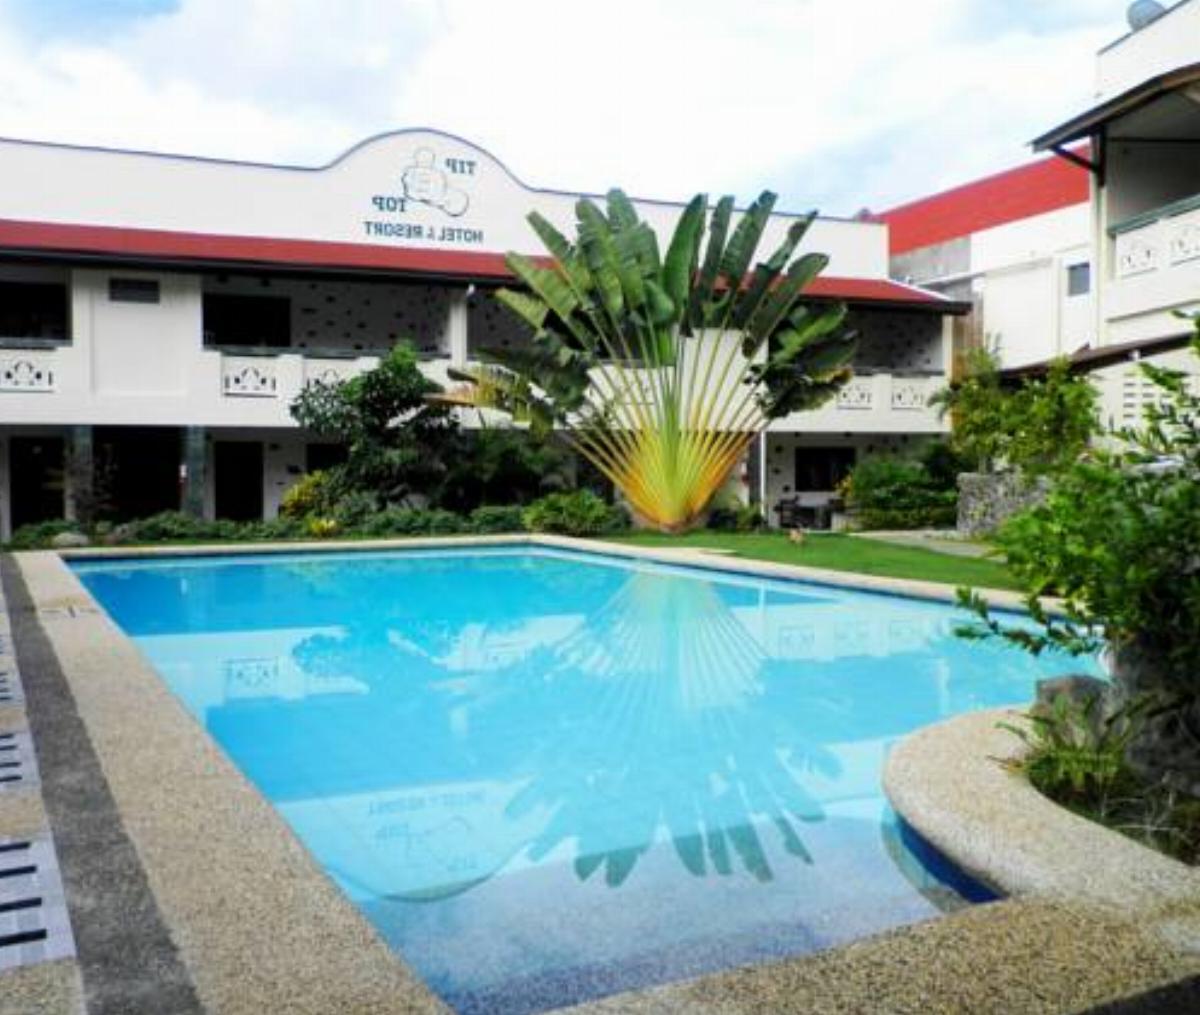 TipTop Hotel, Resto and Delishop Hotel Panglao Philippines